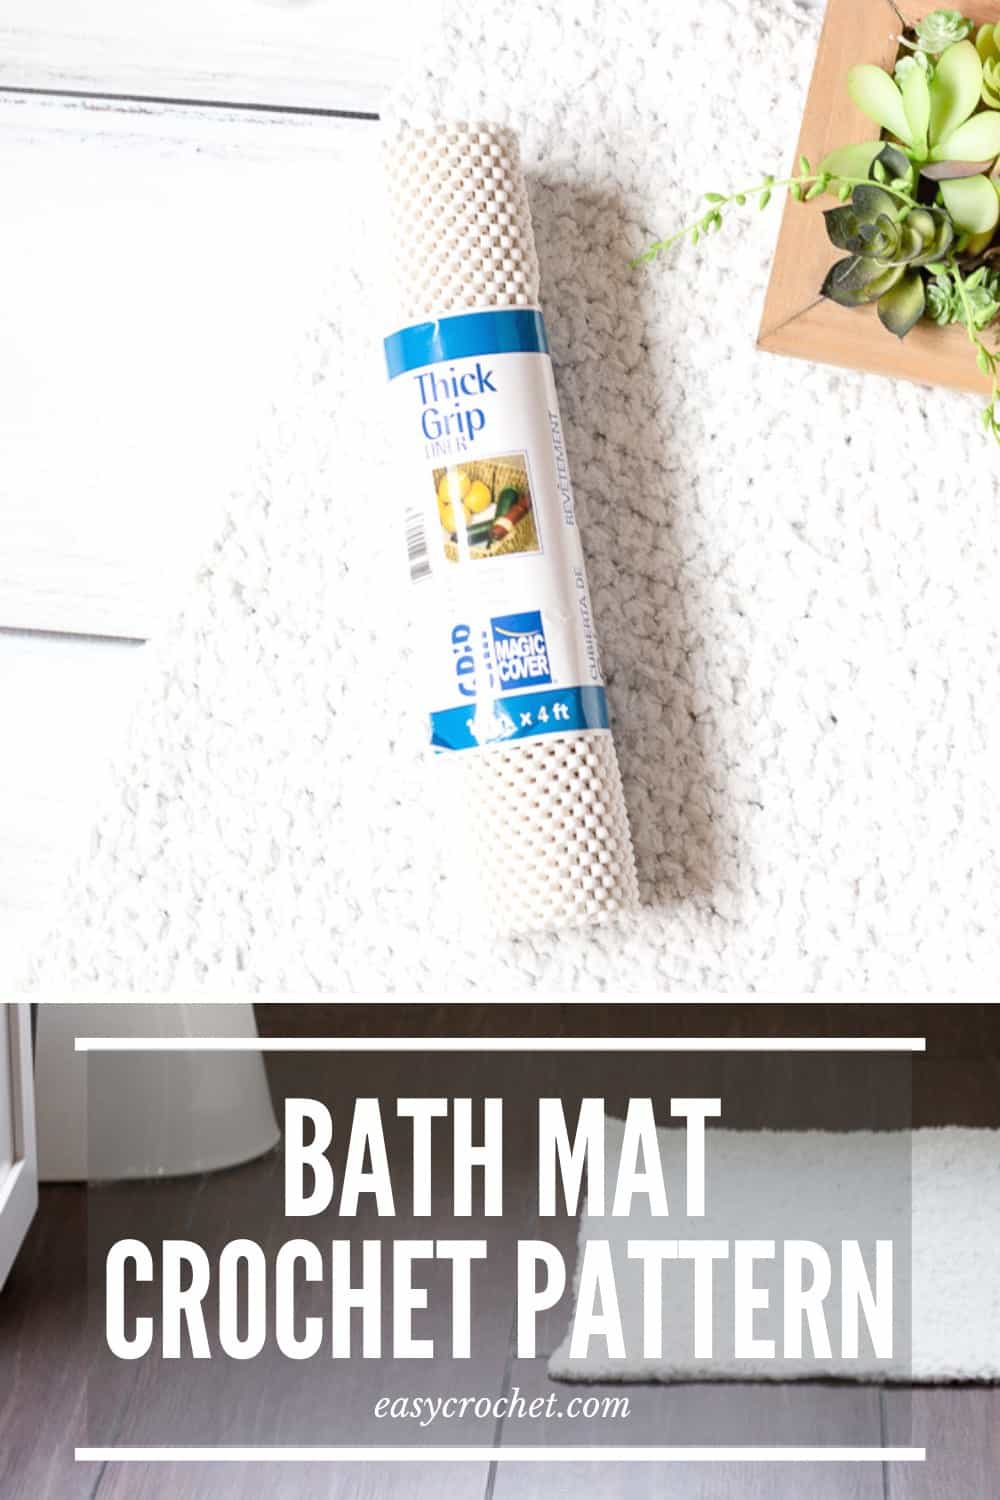 Bath Mat Crochet Pattern Free via @easycrochetcom